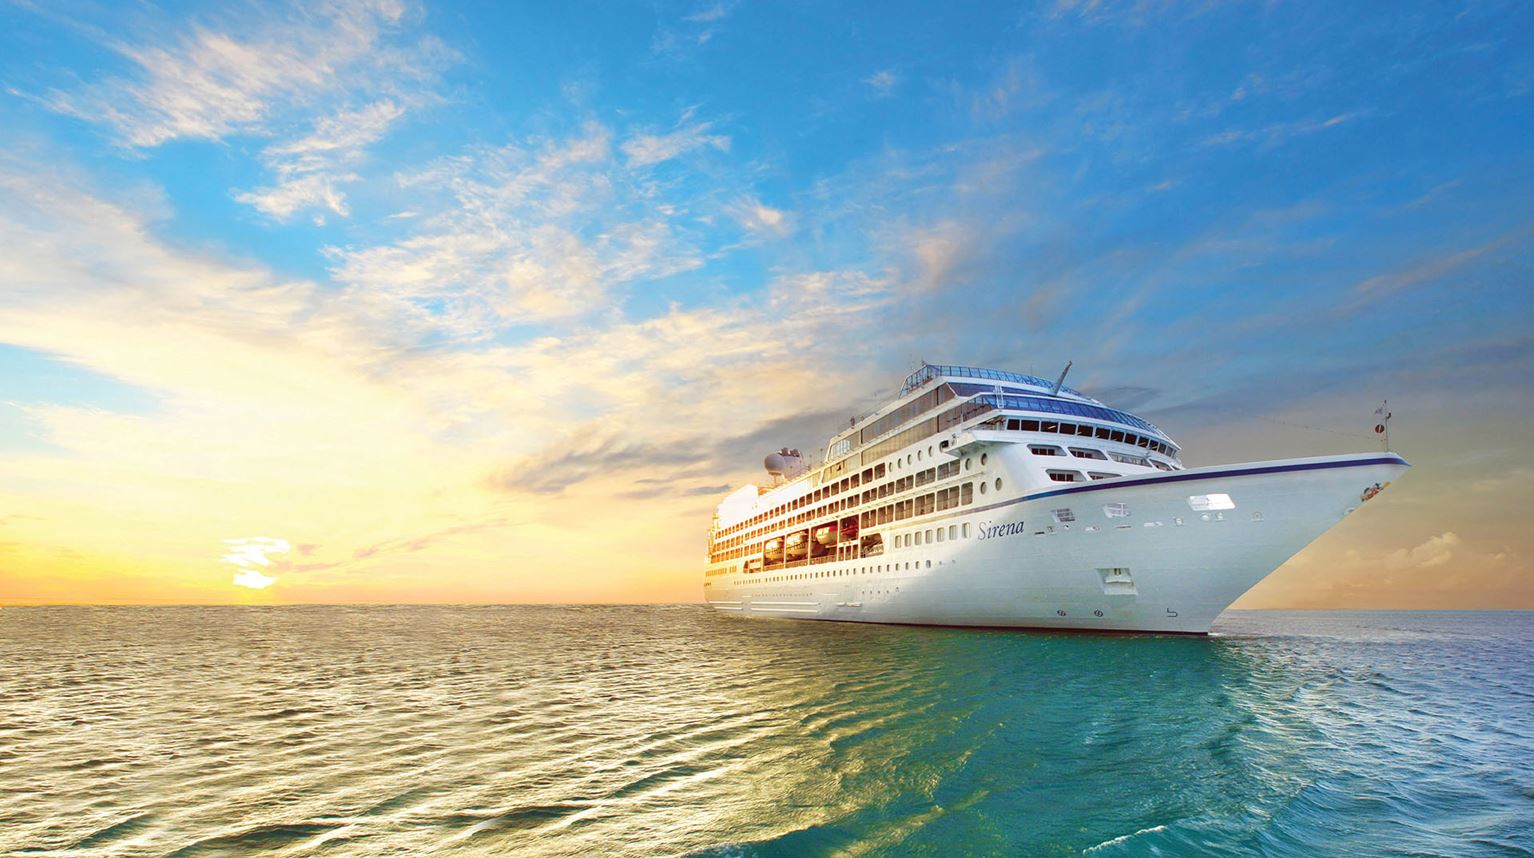 The Sirena cruise ship illuminated by the setting sun at sea. 